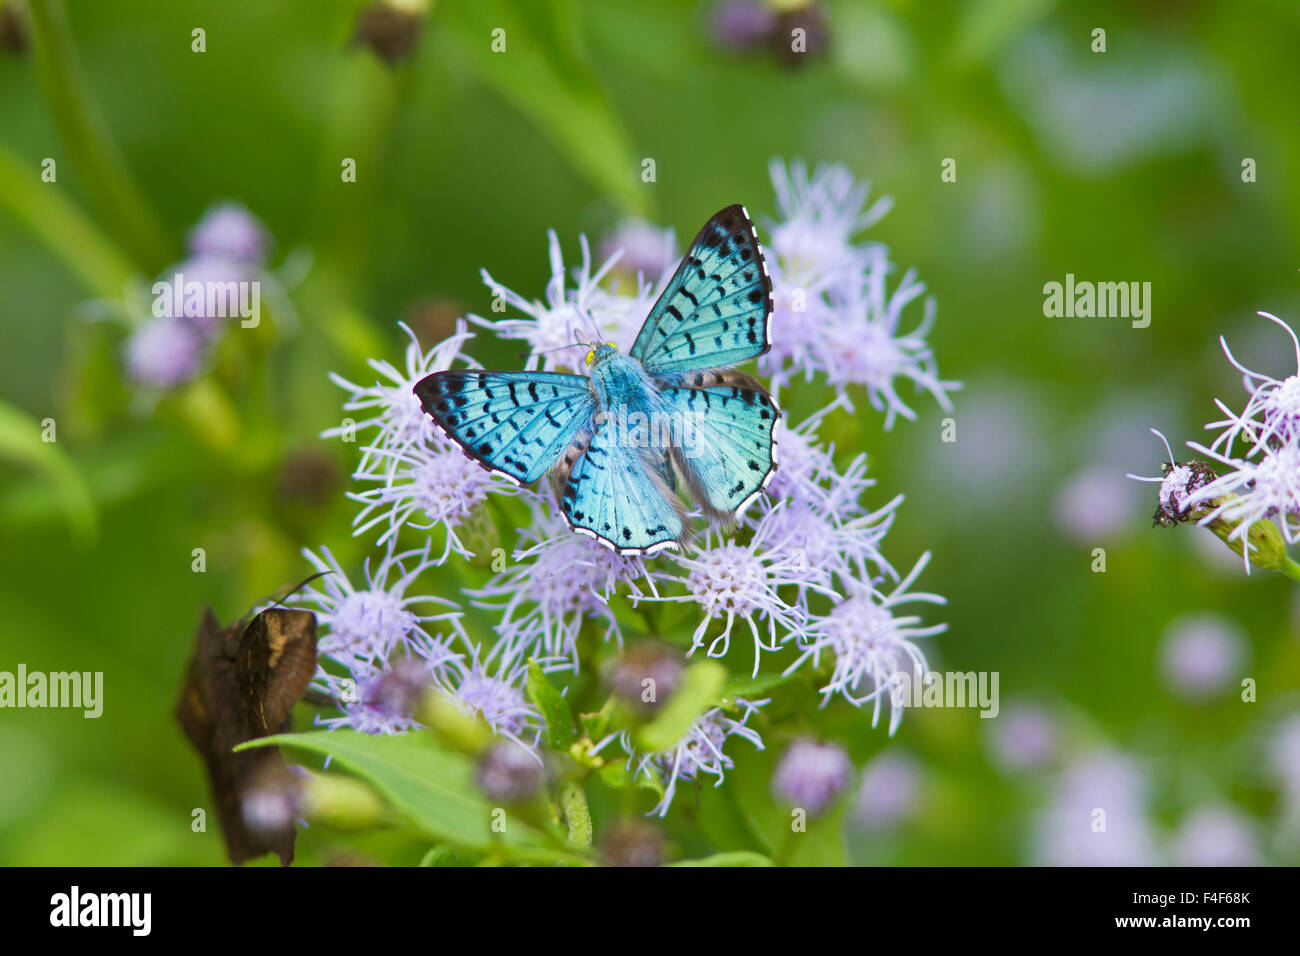 Cameron County, Texas. Blue Metalmark (Lasaia sula) male butterfly Nectaring on mistflower Stock Photo